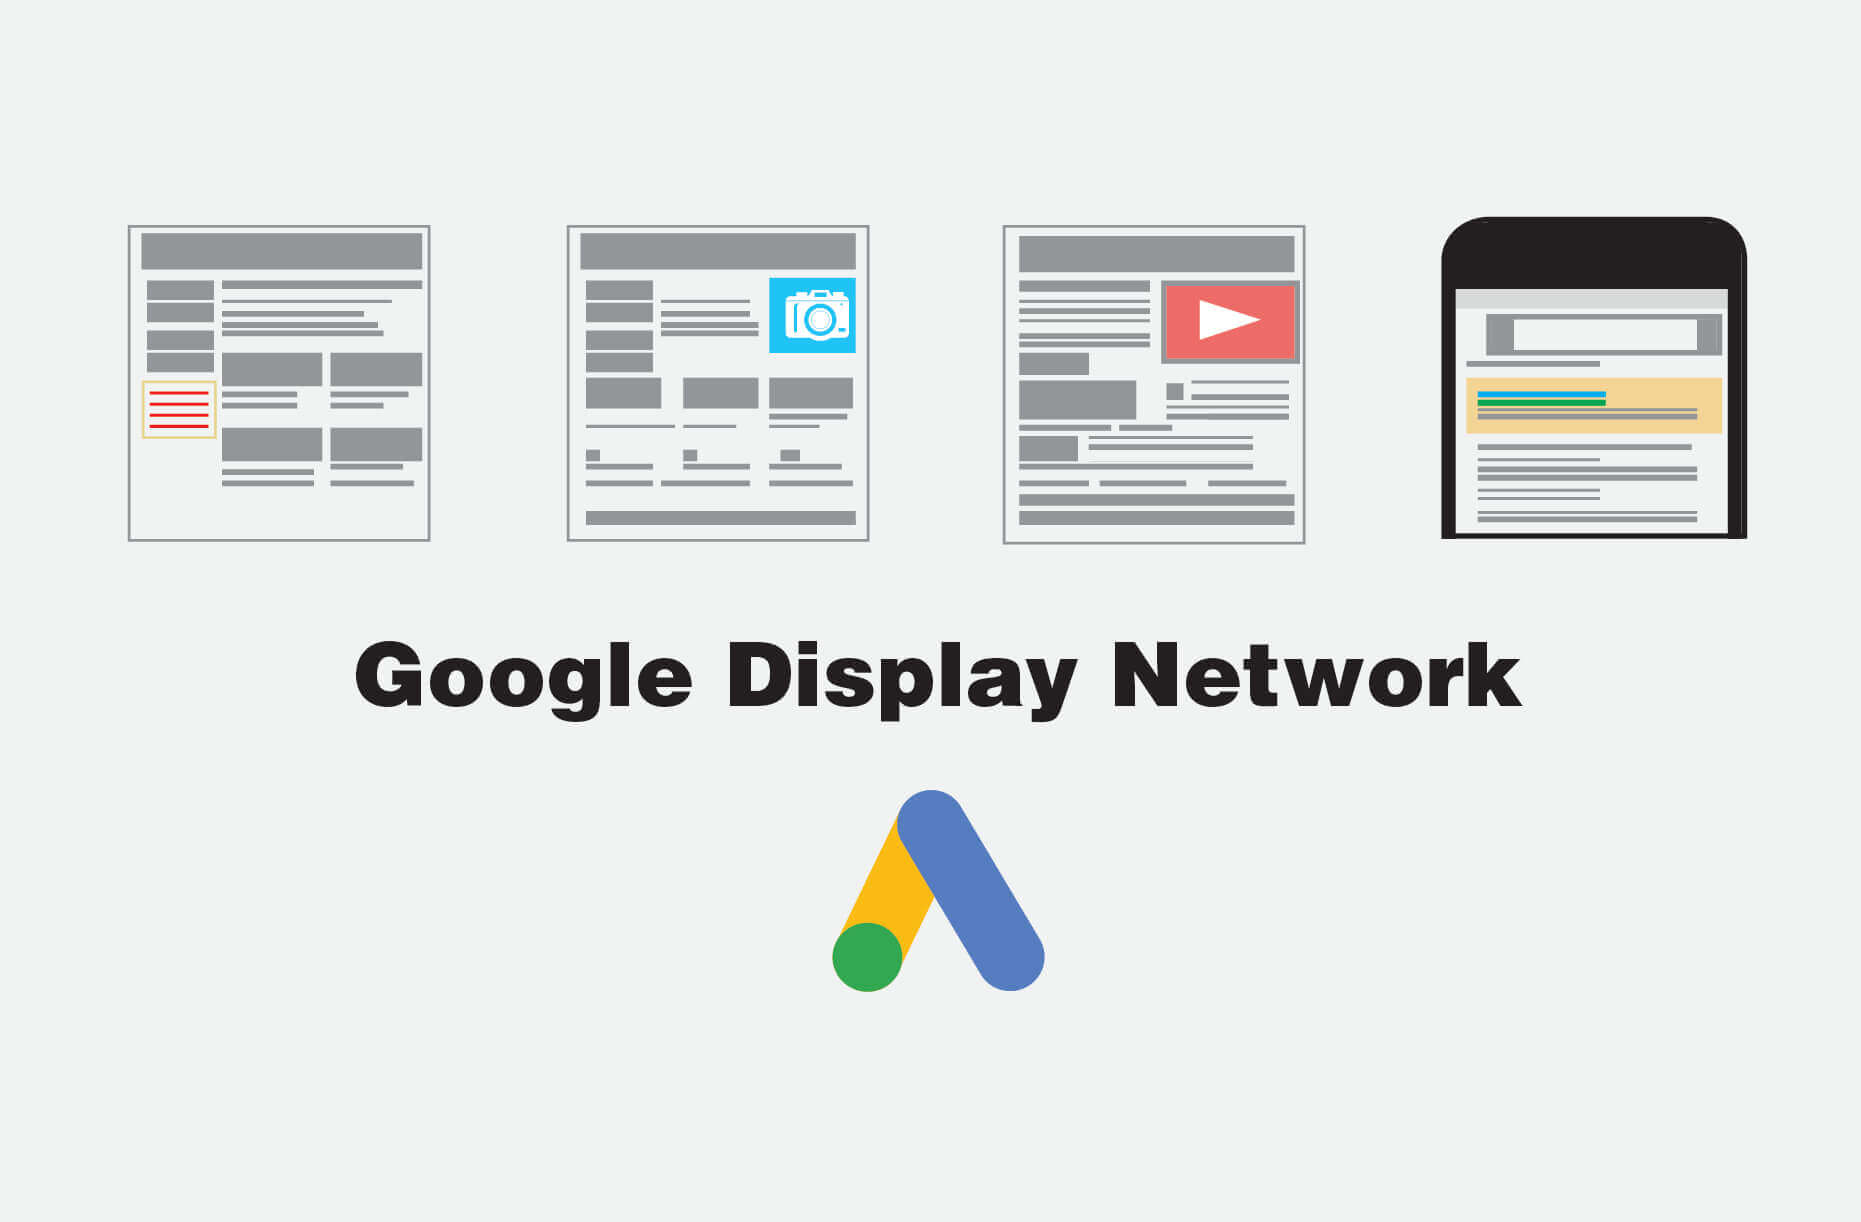 Google Display Network.